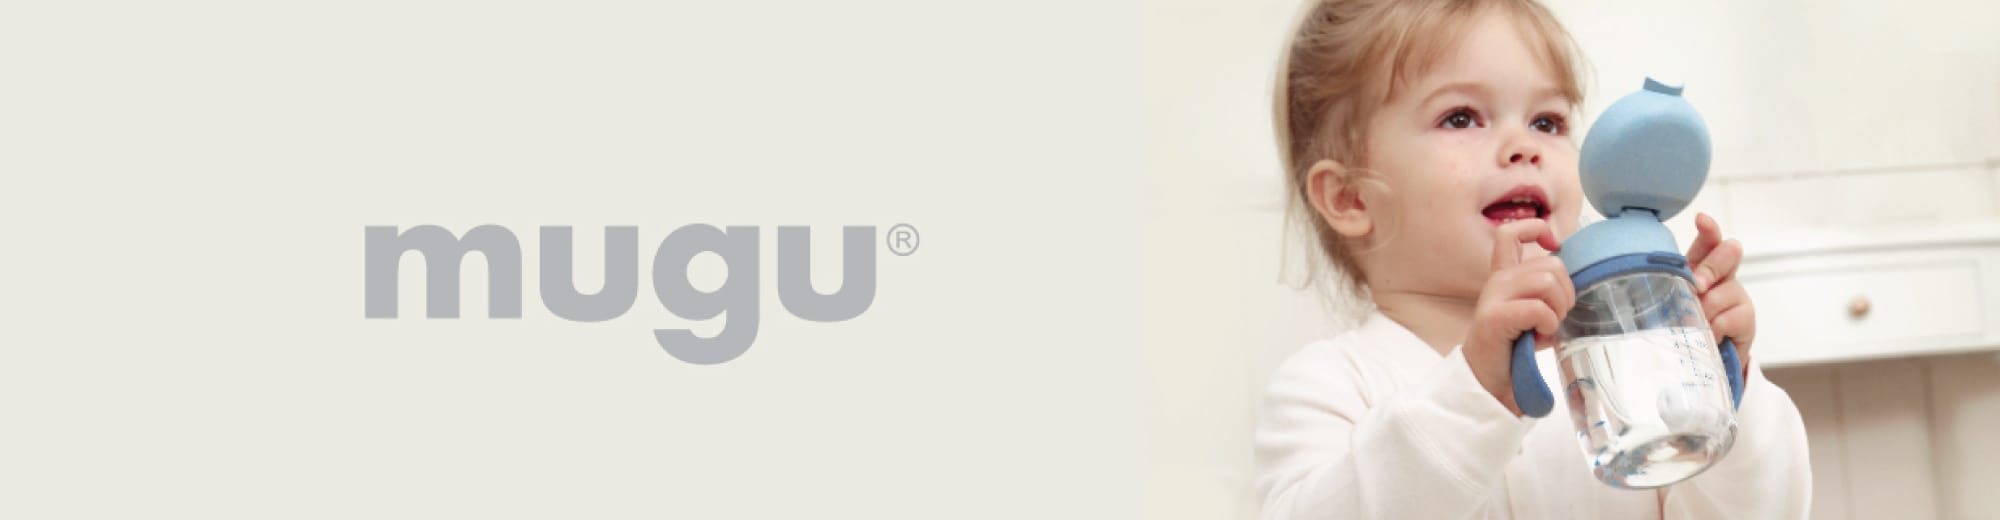 mugu brand banner image